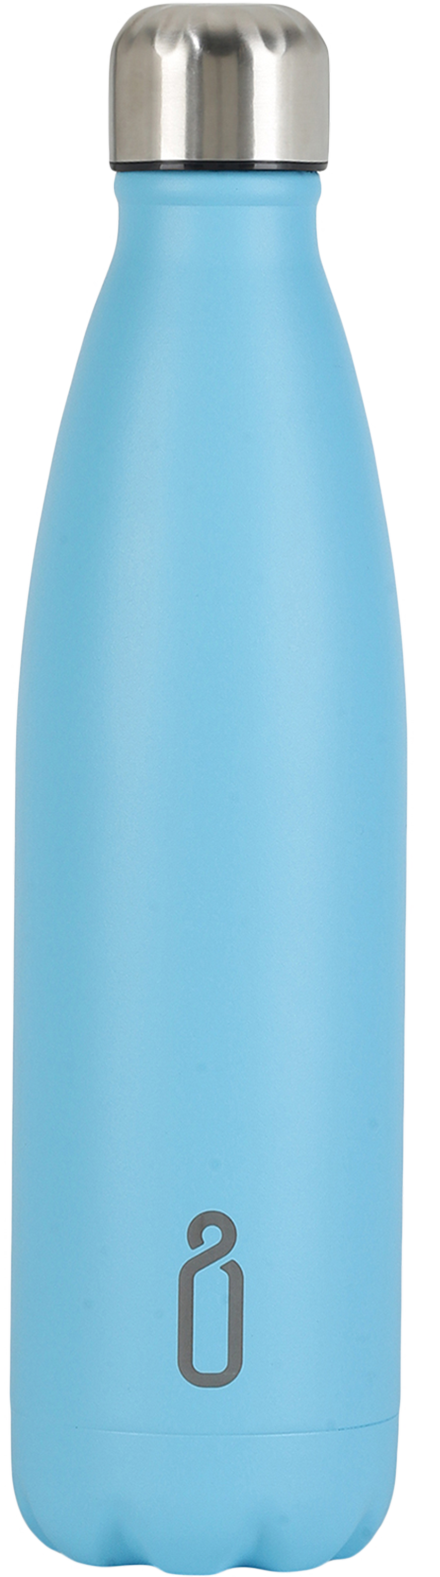 Pastel Blue Reusable Water Bottle 750ml